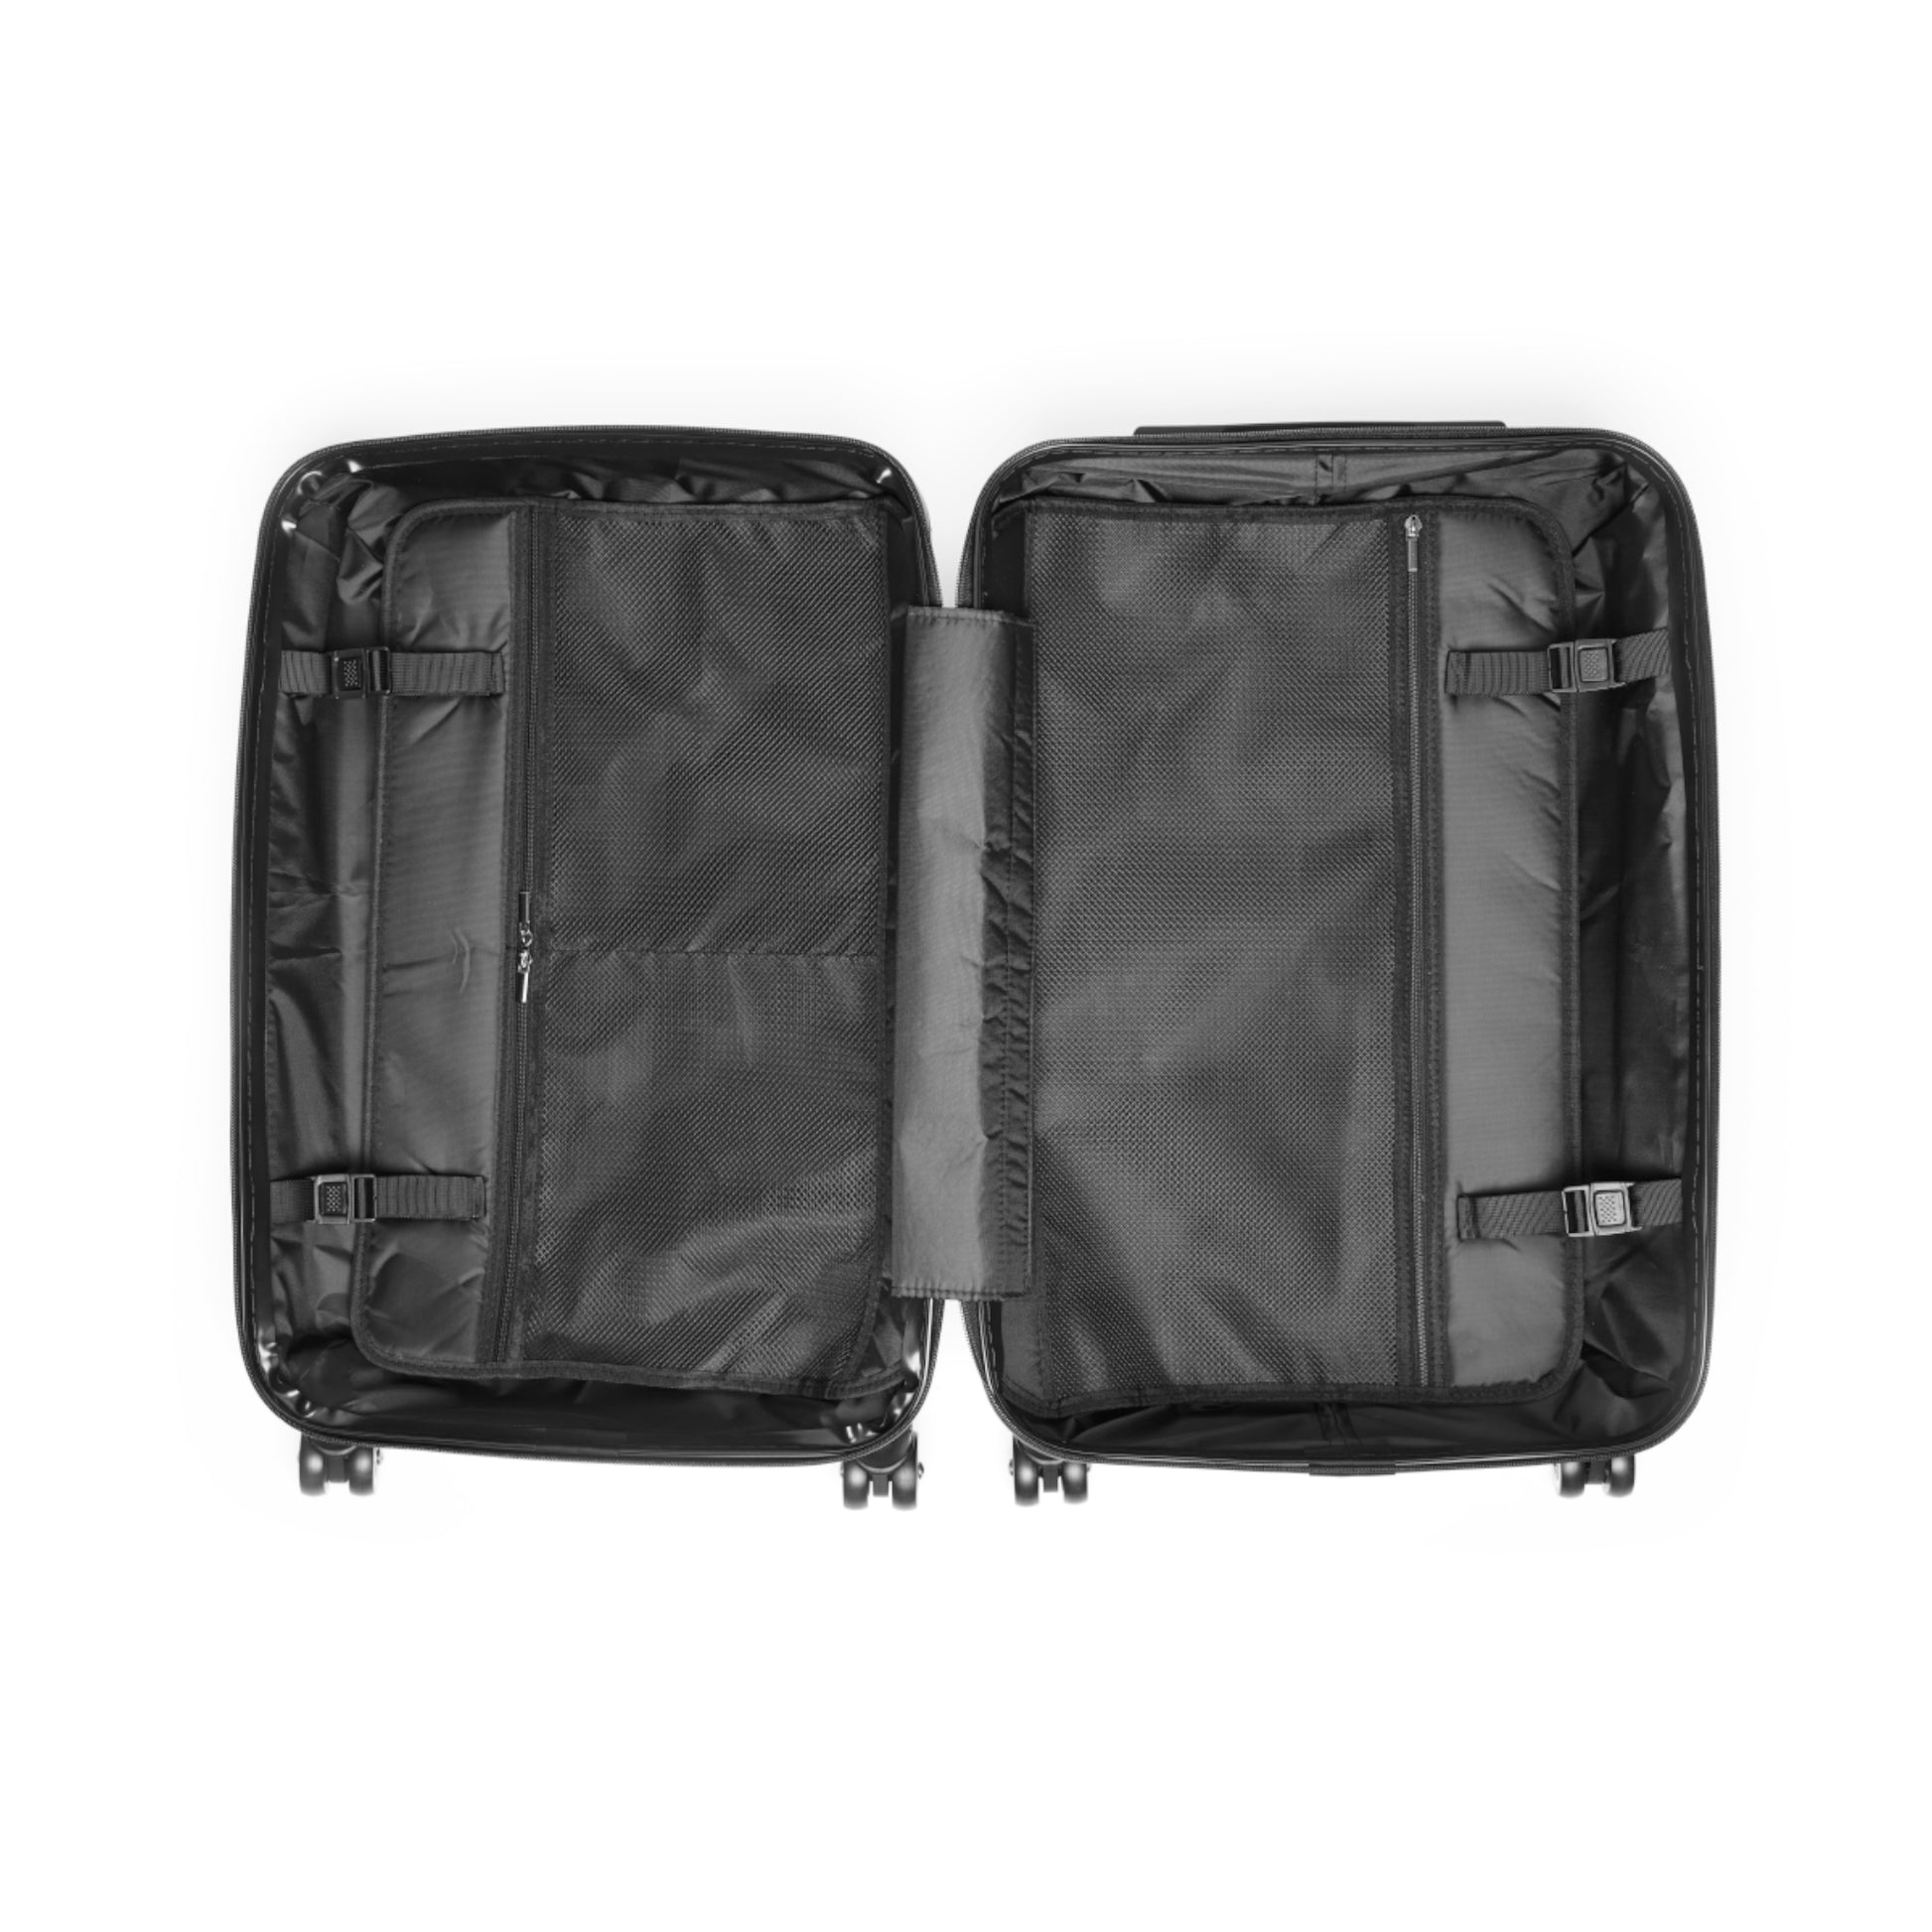 Boho Bliss Jungle Suitcase, Tropical Designer Suitcase